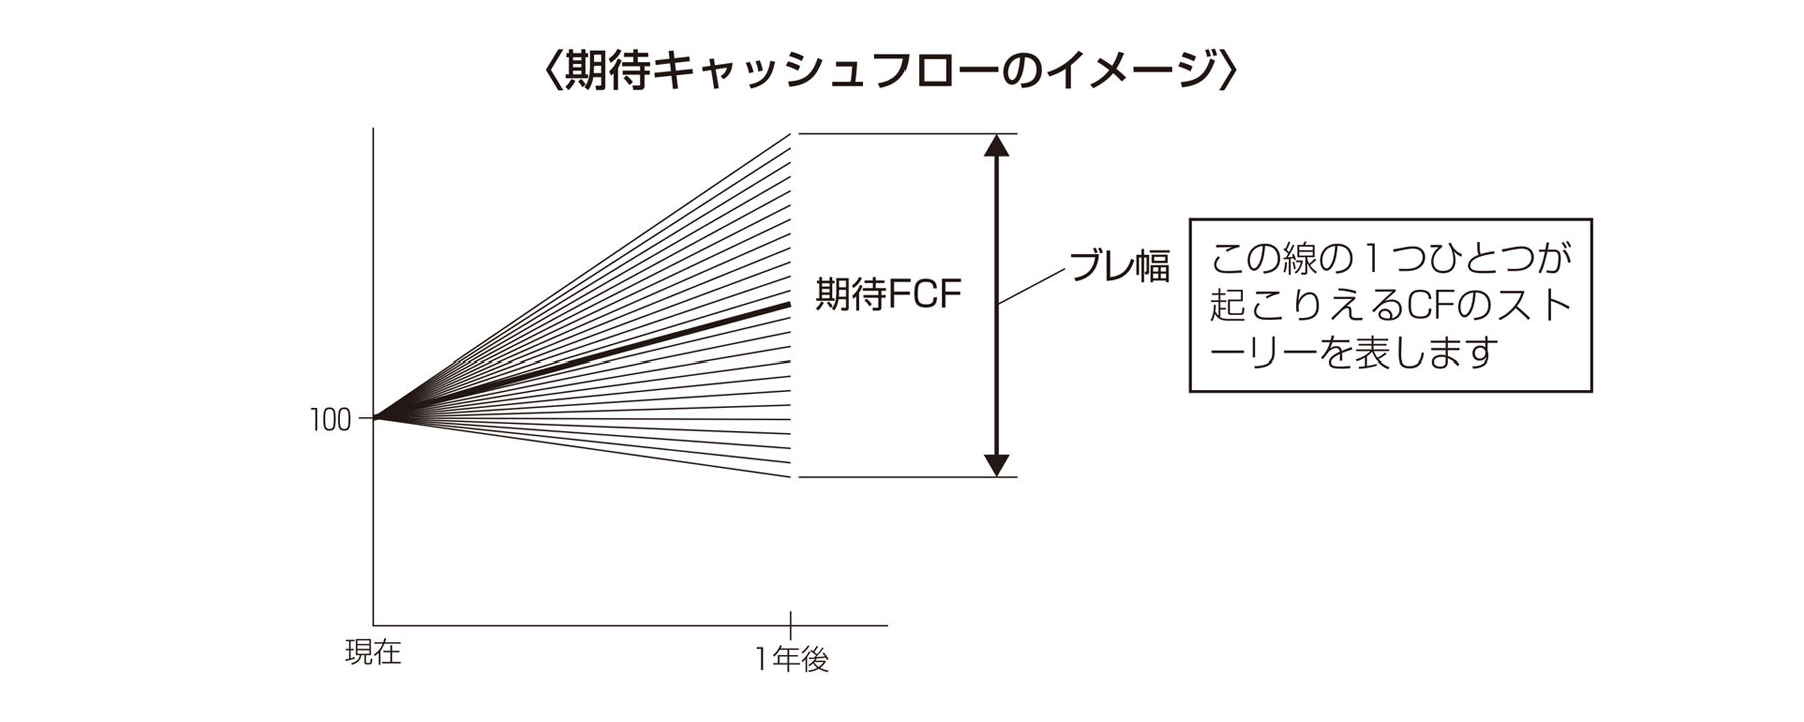 М＆A用語,会社売却,期待FCFのイメージ図